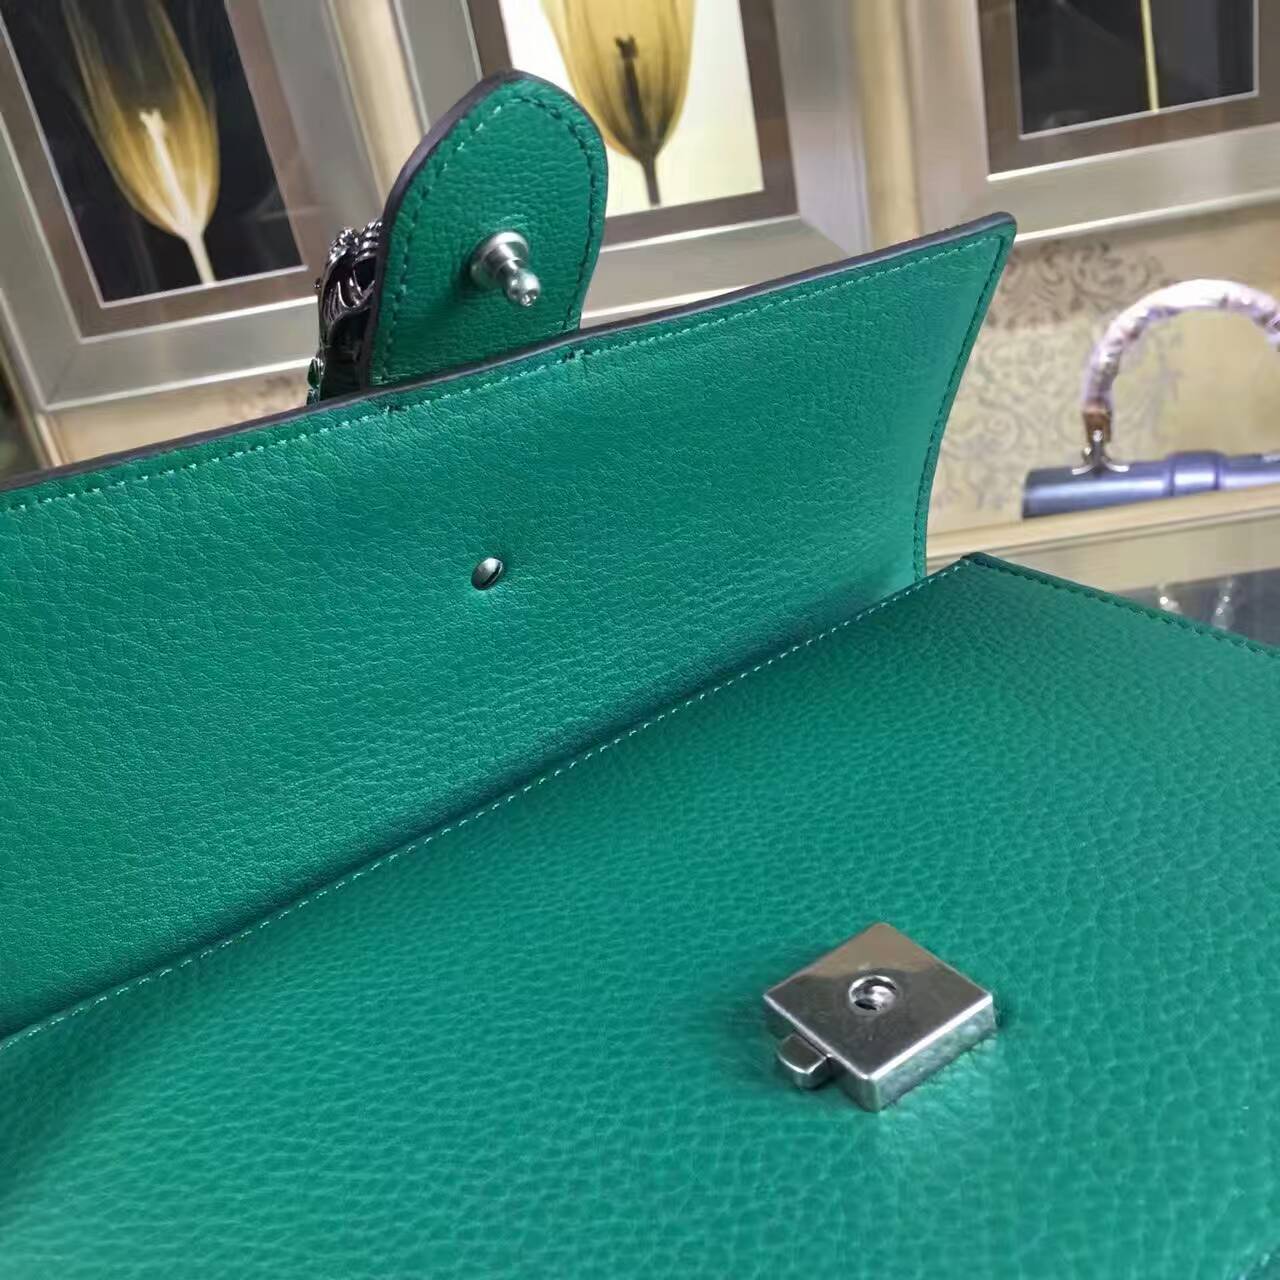 Gucci Dionysus leather top handle bag-448075